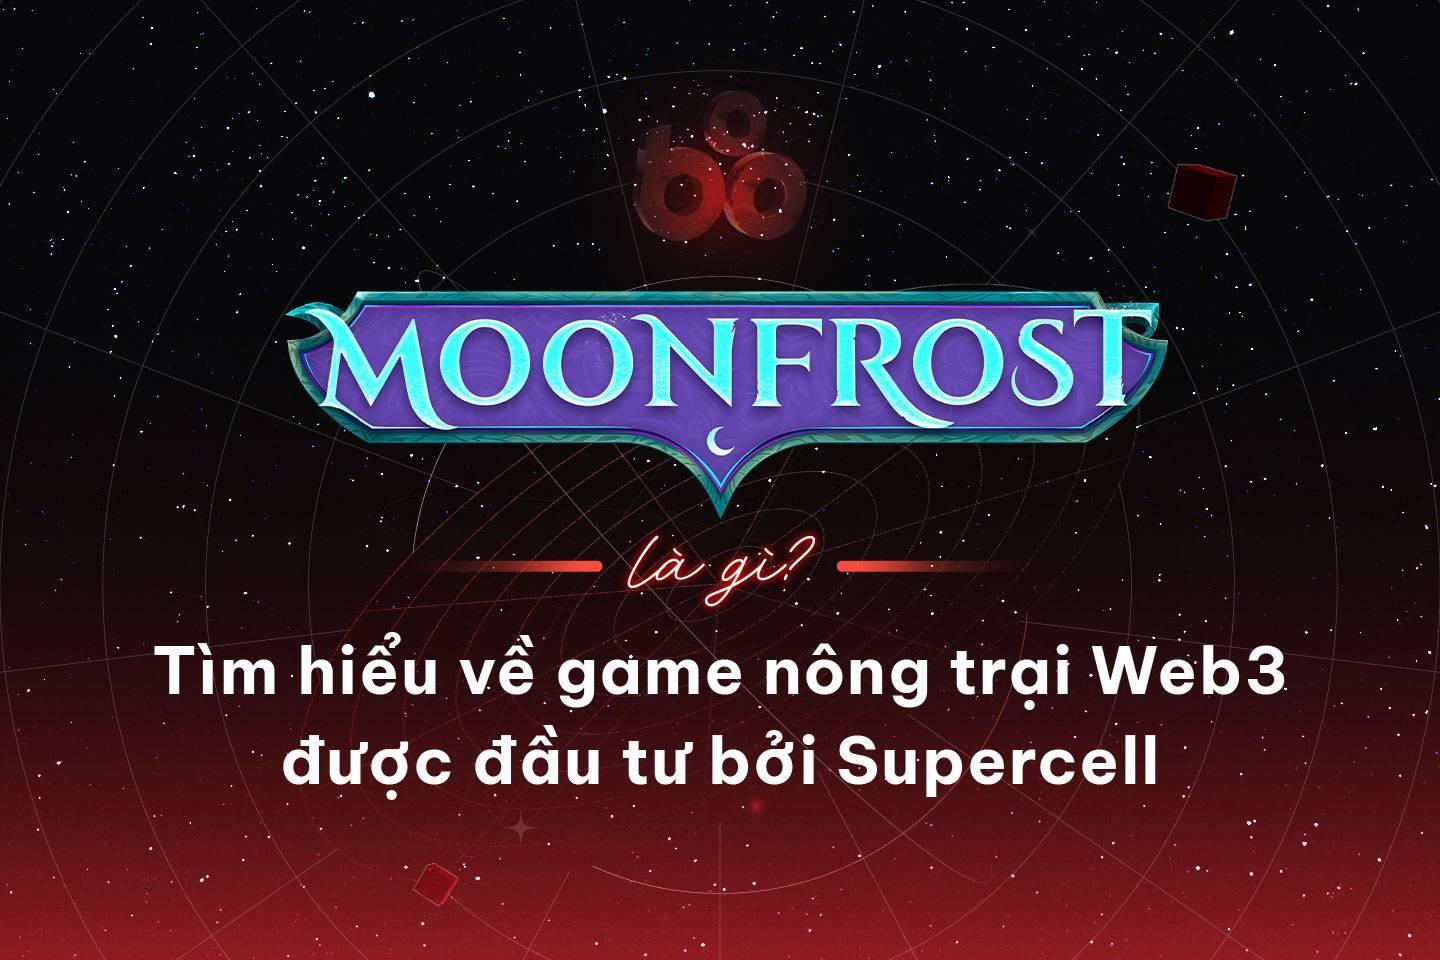 moonfrost-la-gi-tim-hieu-ve-game-nong-trai-web3-duoc-dau-tu-boi-supercell